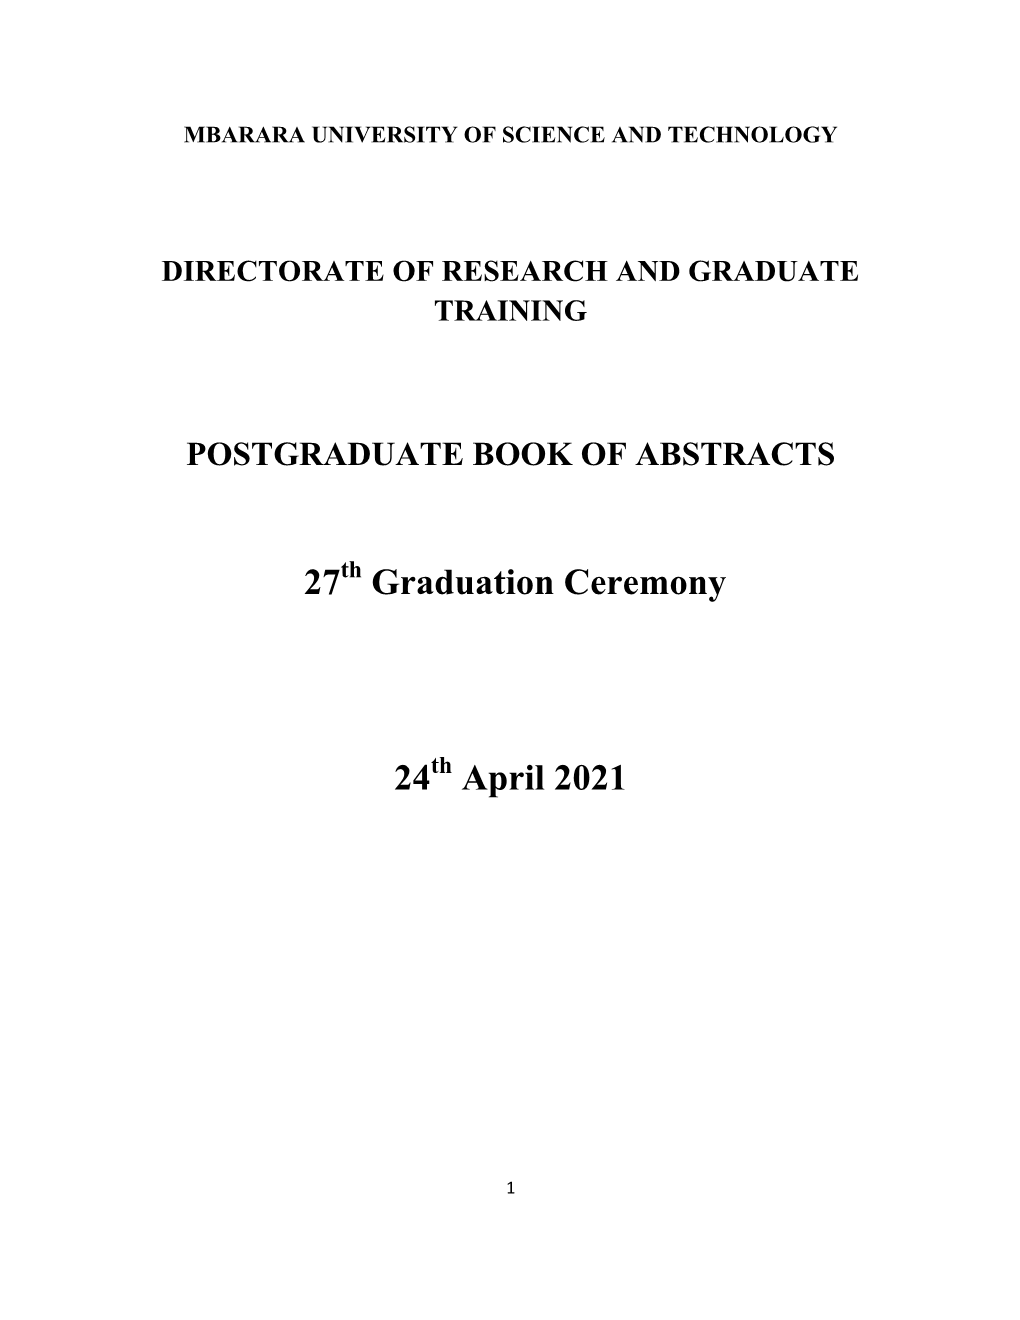 Postgraduate Graduation Book of Abstracts